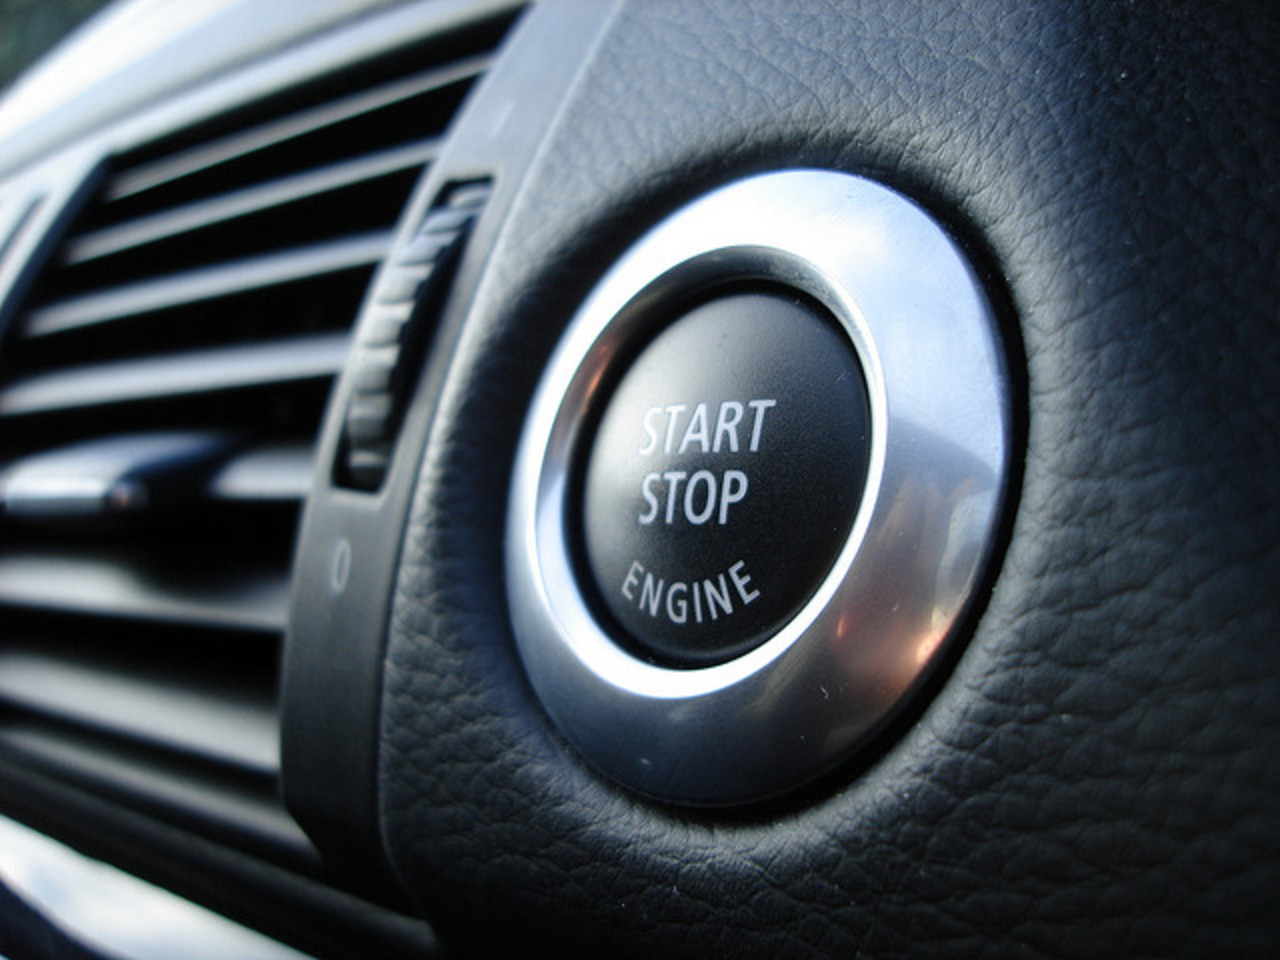 BMW 116i SE, Engine Start/Stop button | Flickr - Photo Sharing!